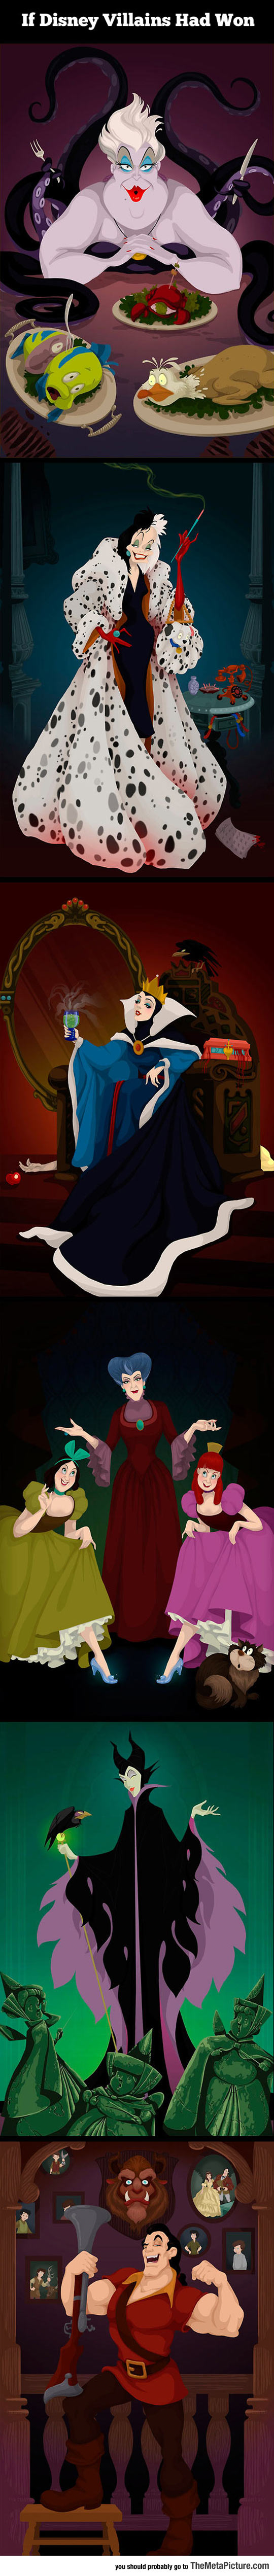 cool-Disney-villains-win-Cinderella